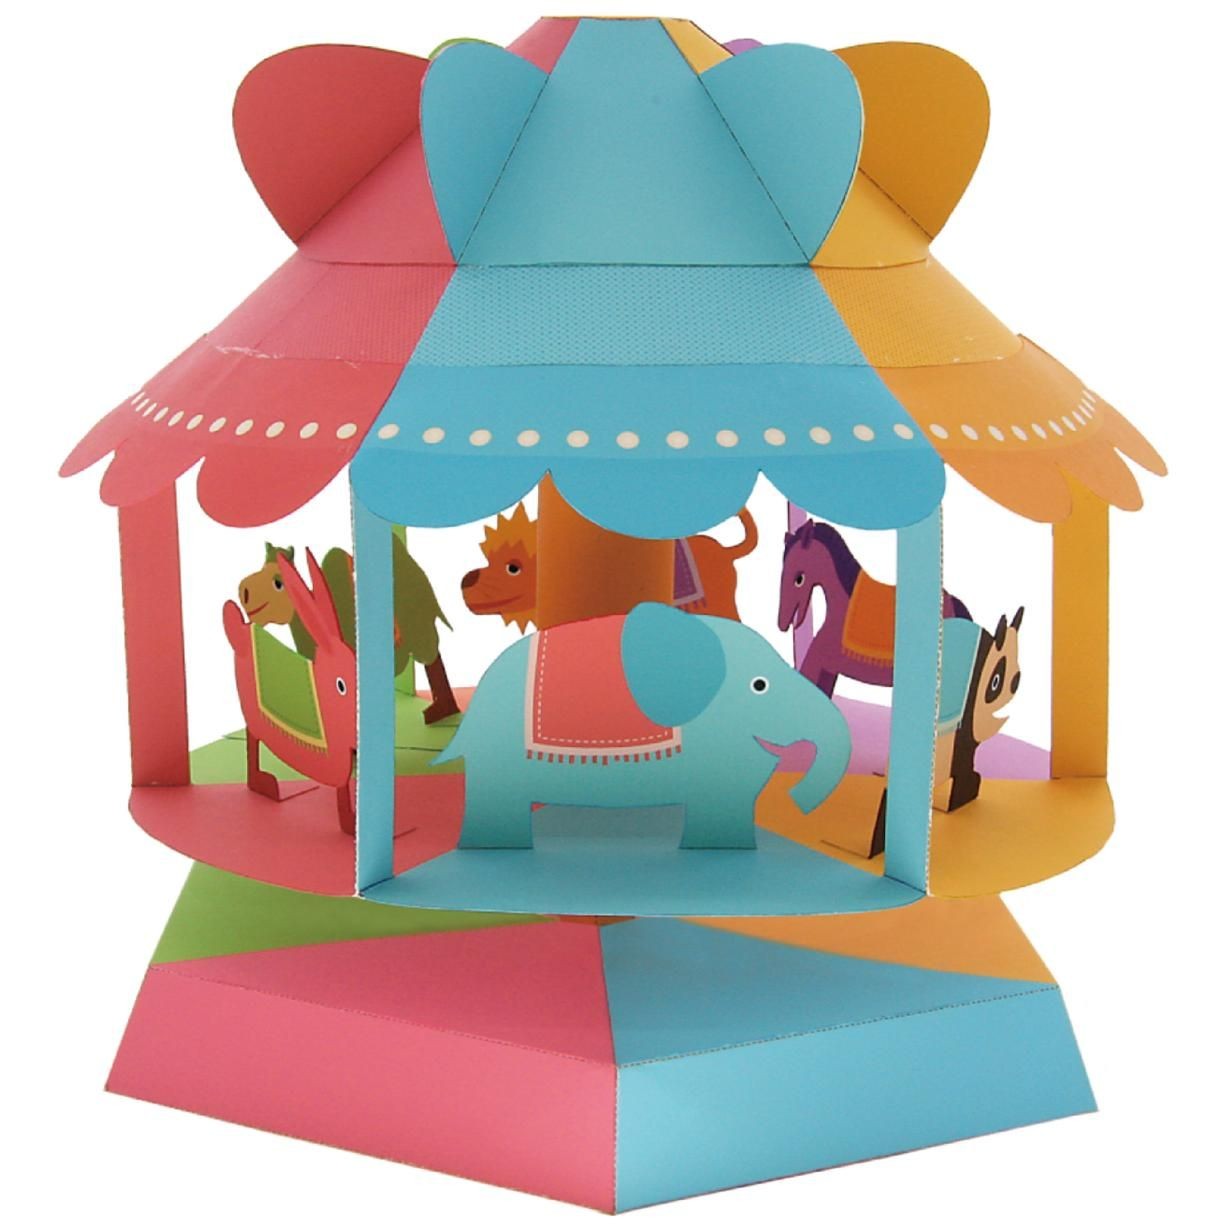 Panda Papercraft Wind Powered Merry Go Round toys Paper Craft Educational Rabbit